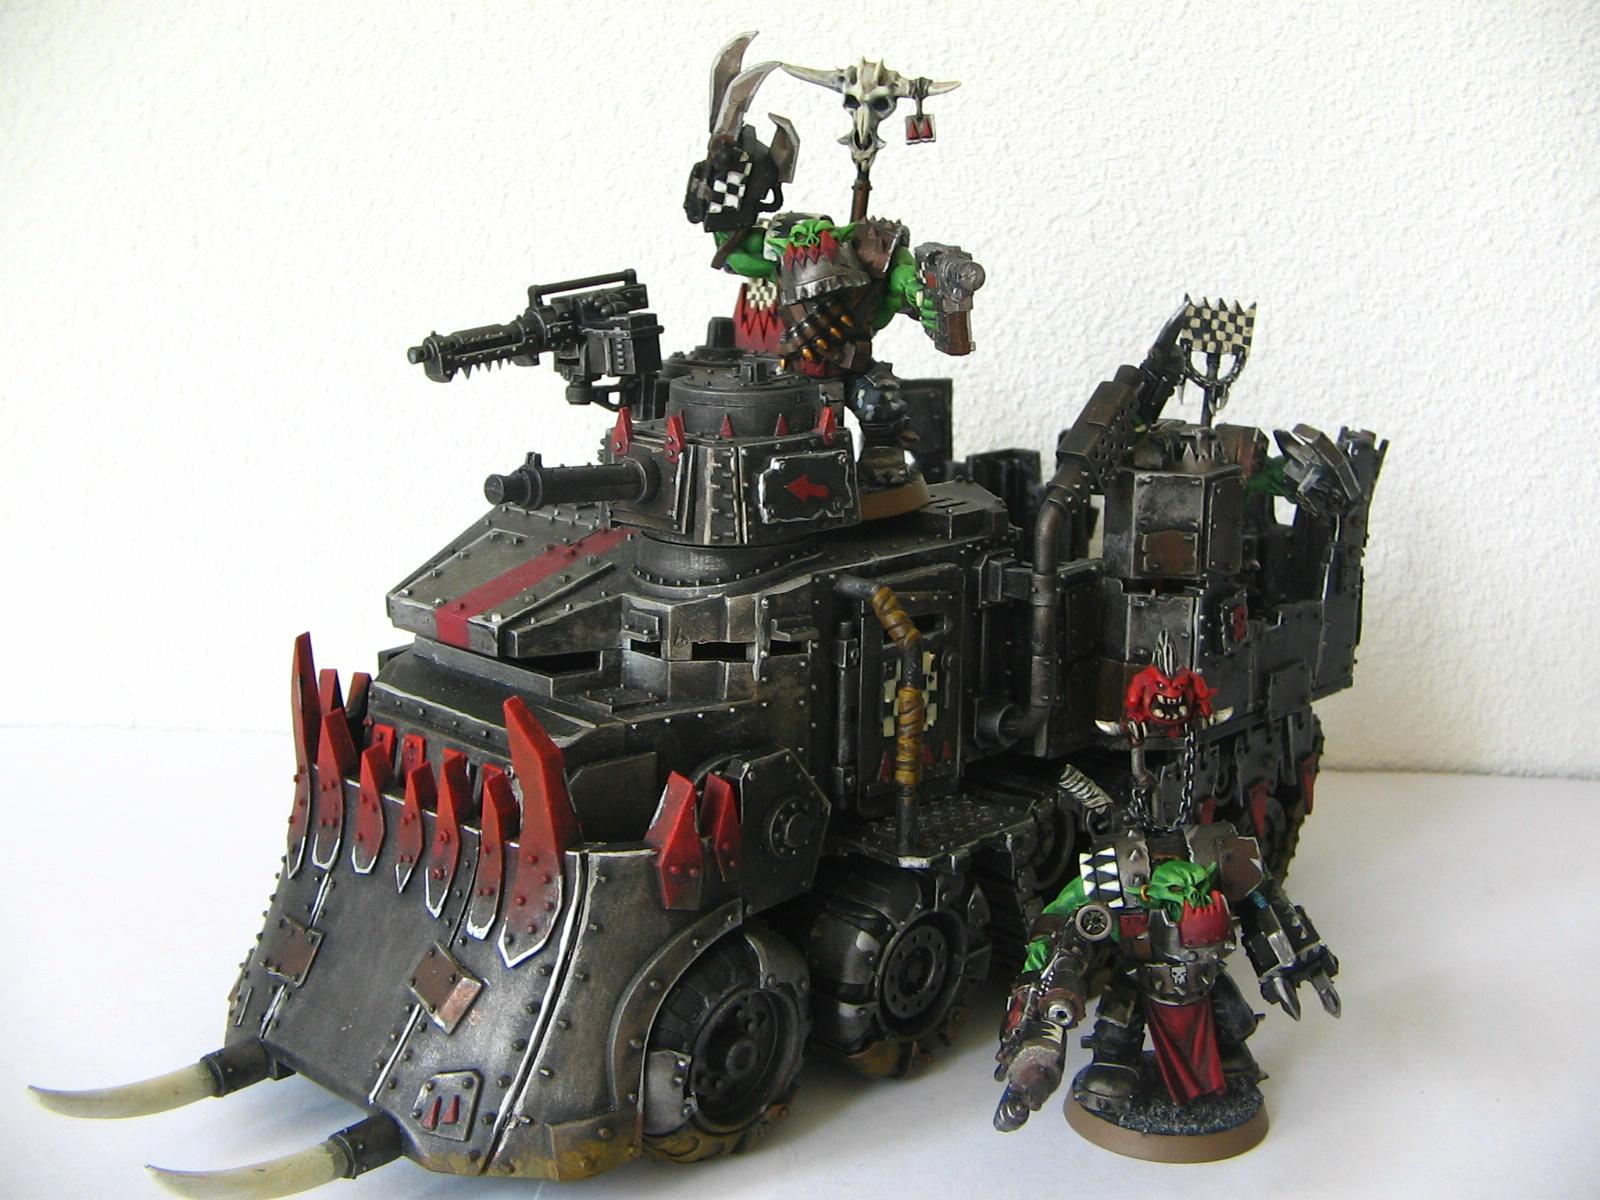 Battlewagon, Orks, One of my BattleWagons full of Nobz